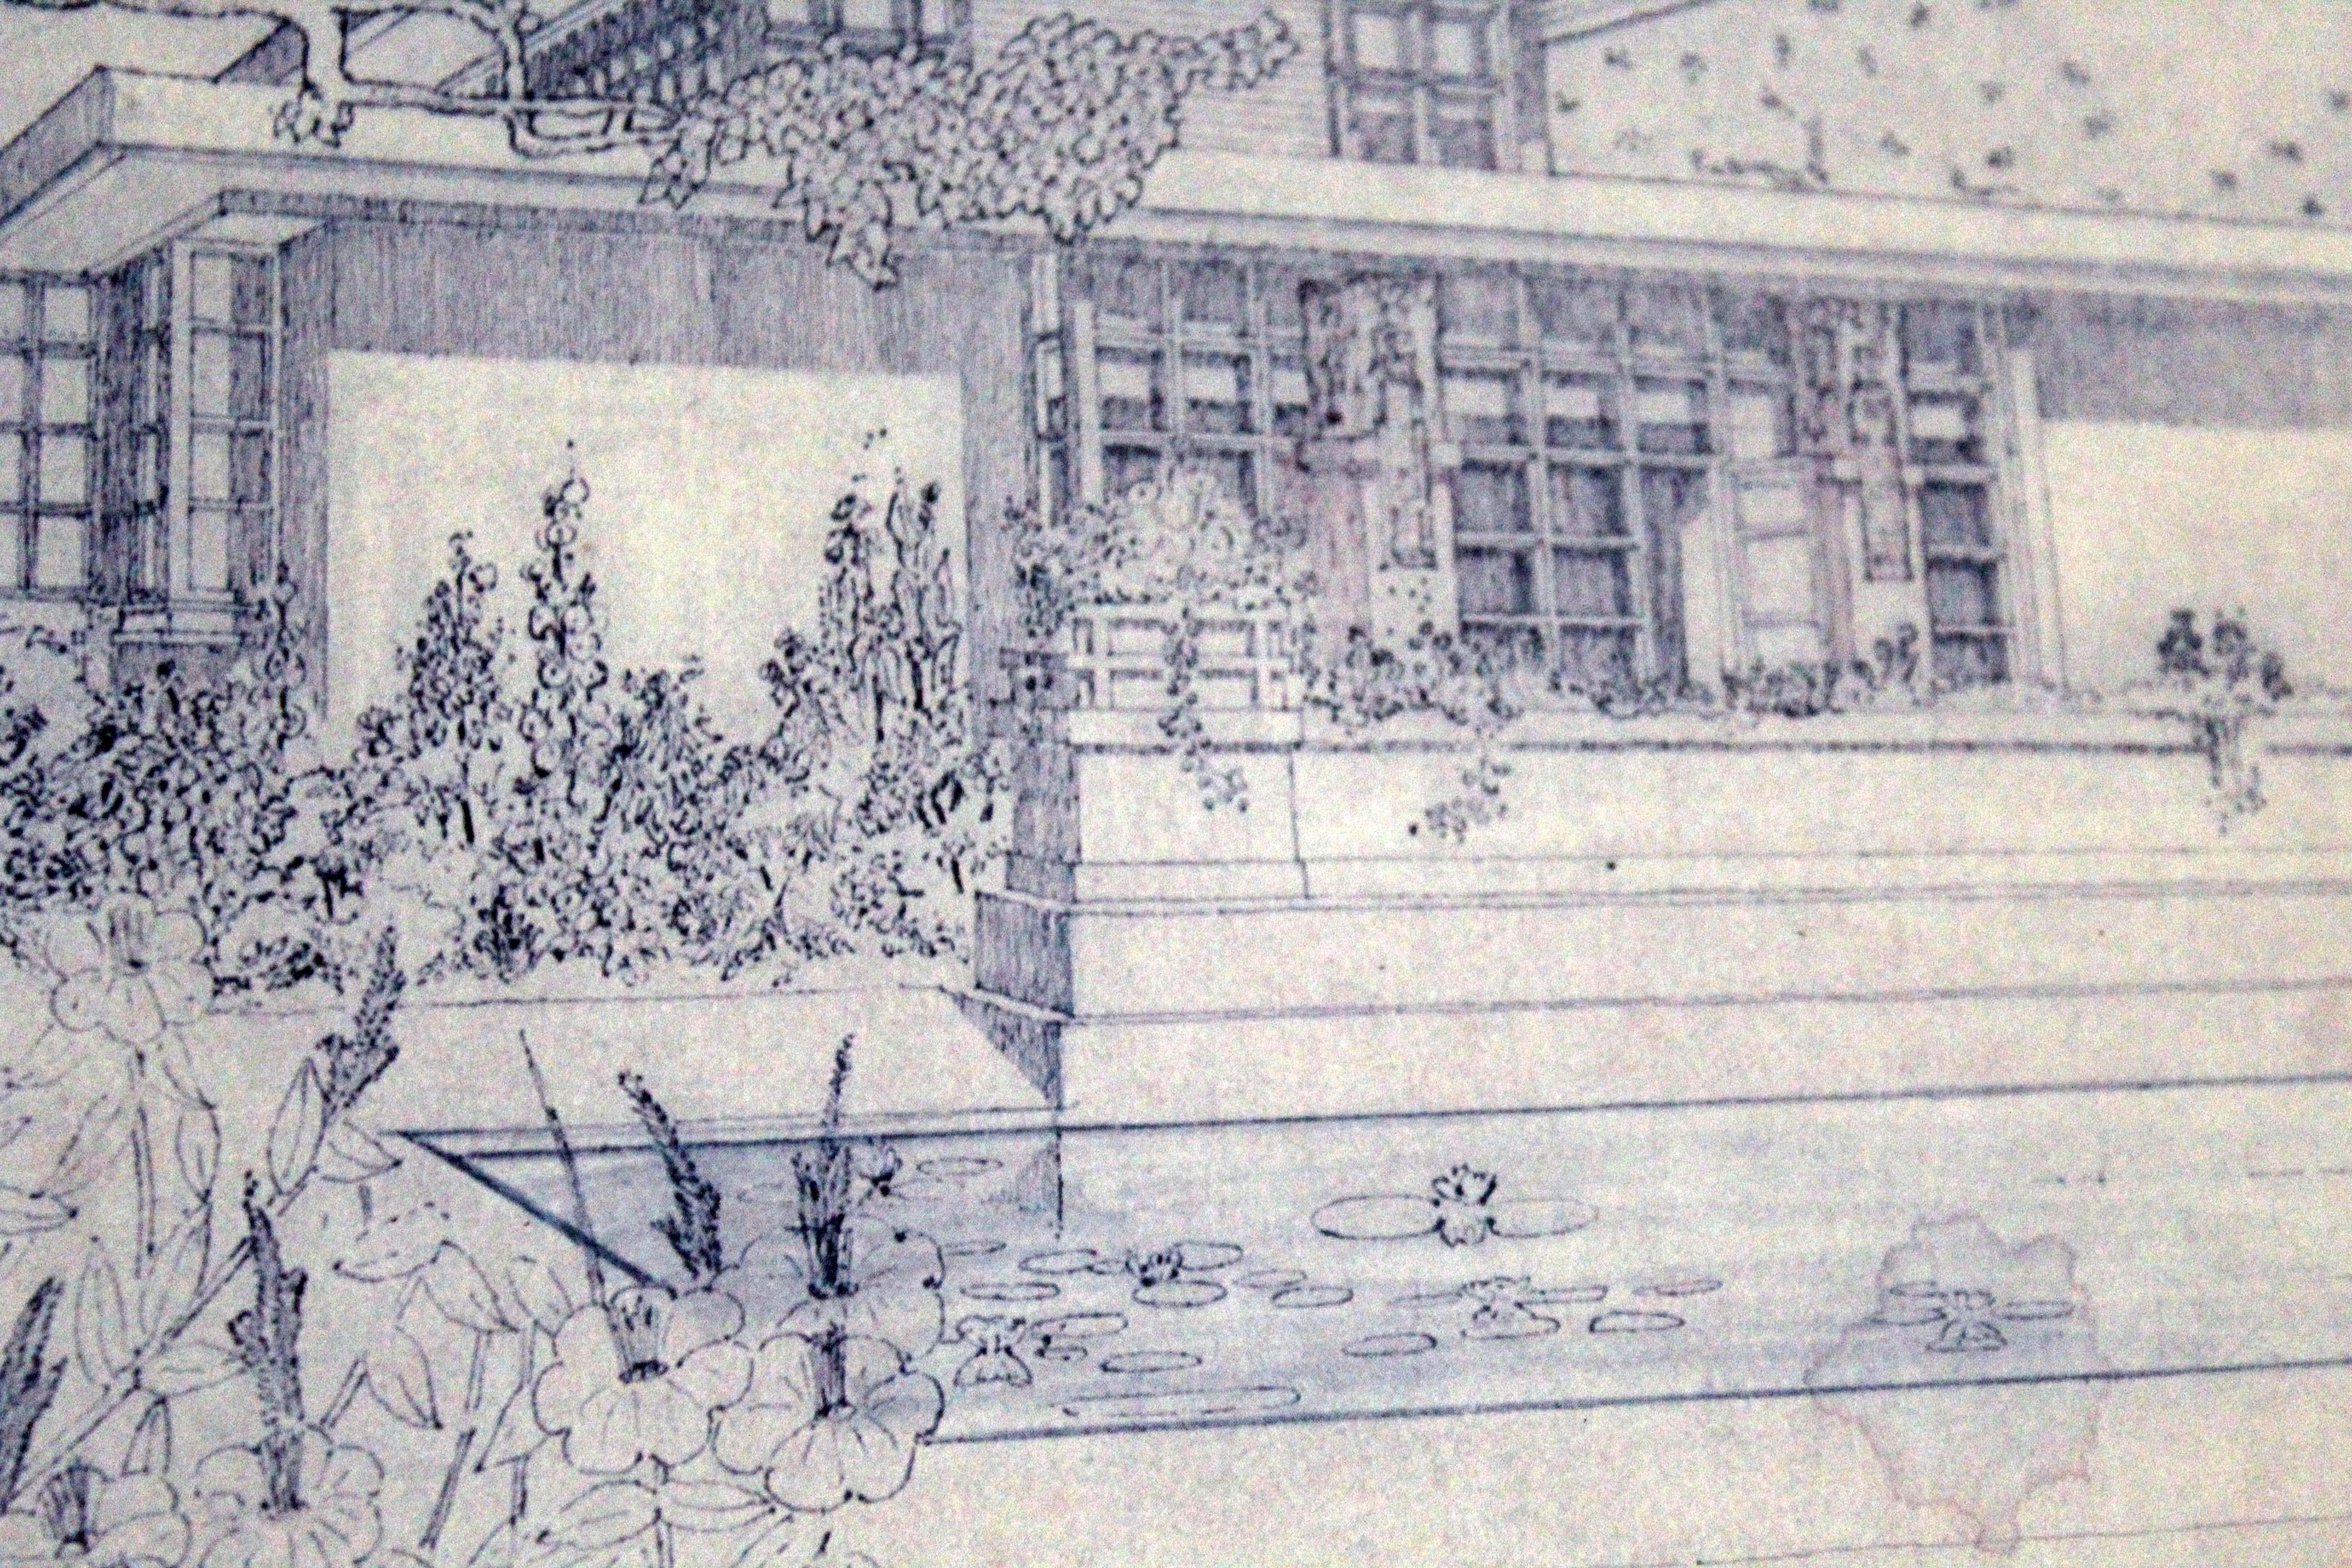 20th Century Frank Lloyd Wright Architectural Drawing Richard Bock Studio